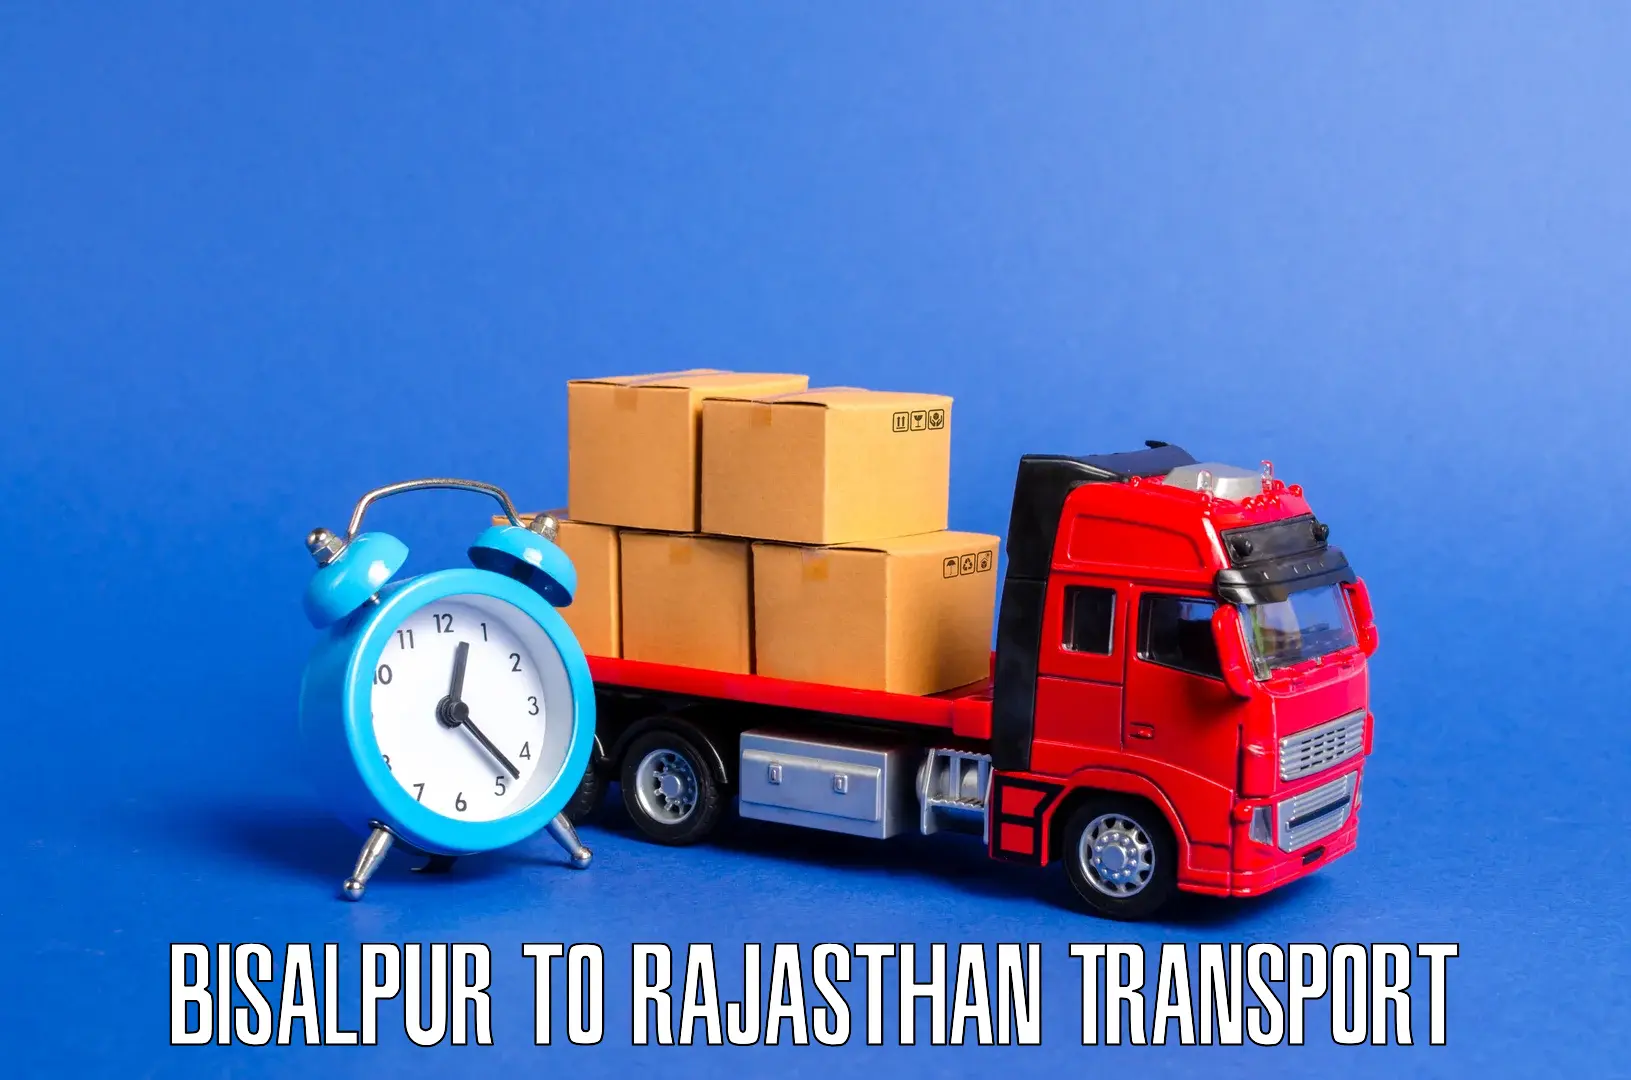 Express transport services Bisalpur to Jodhpur